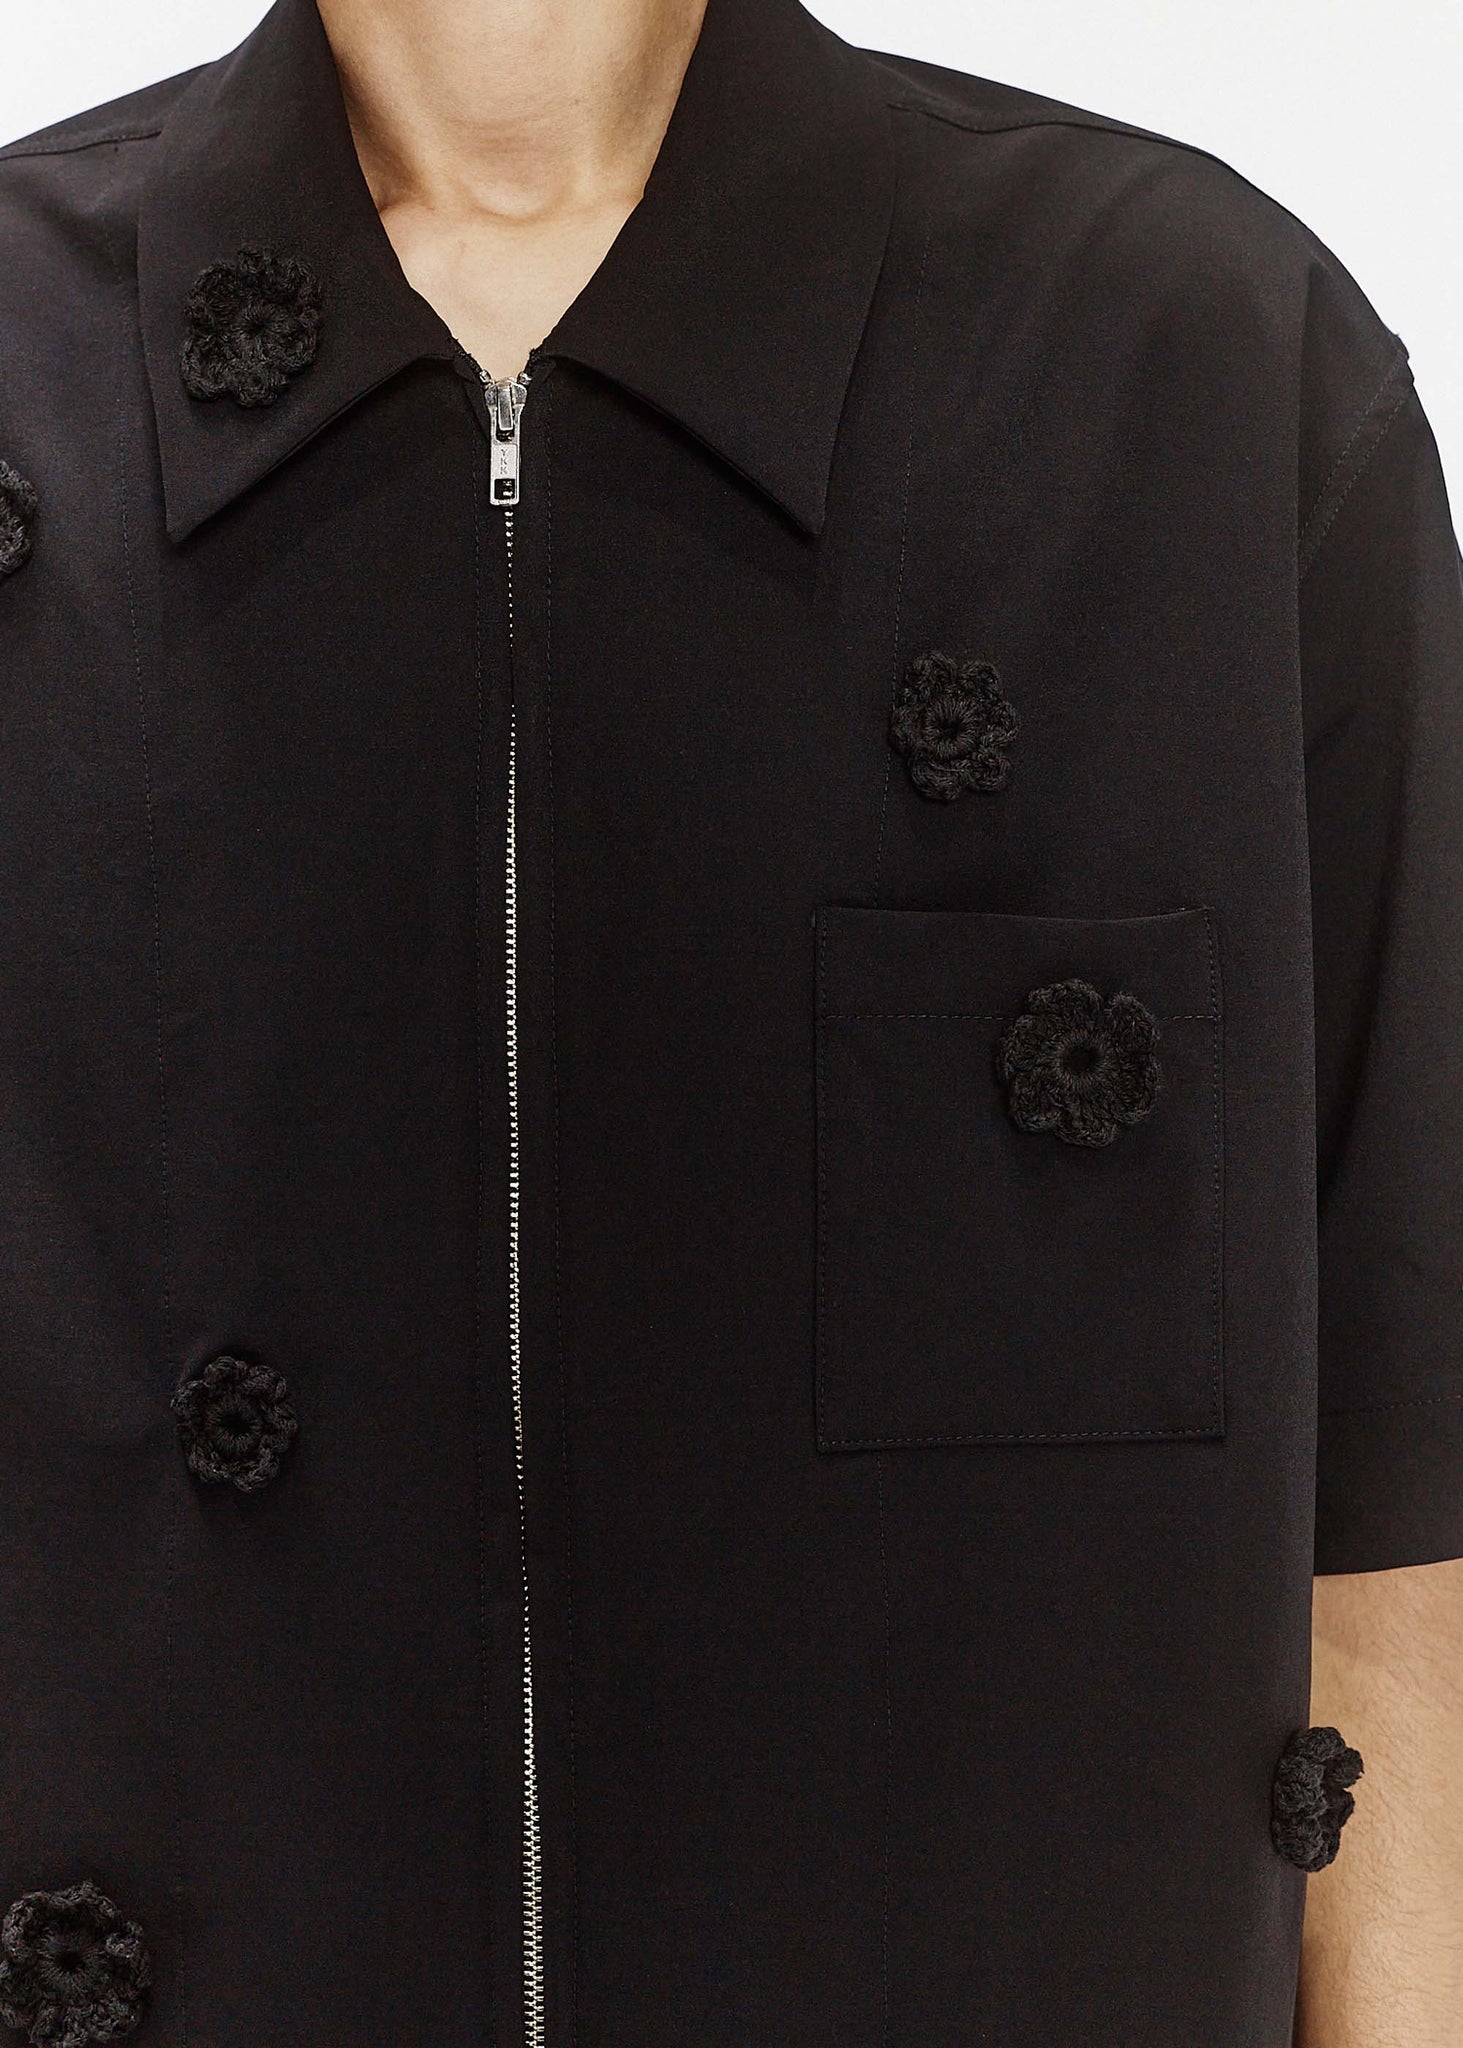 Black Crochet Shortsleeve Zip-up Shirt